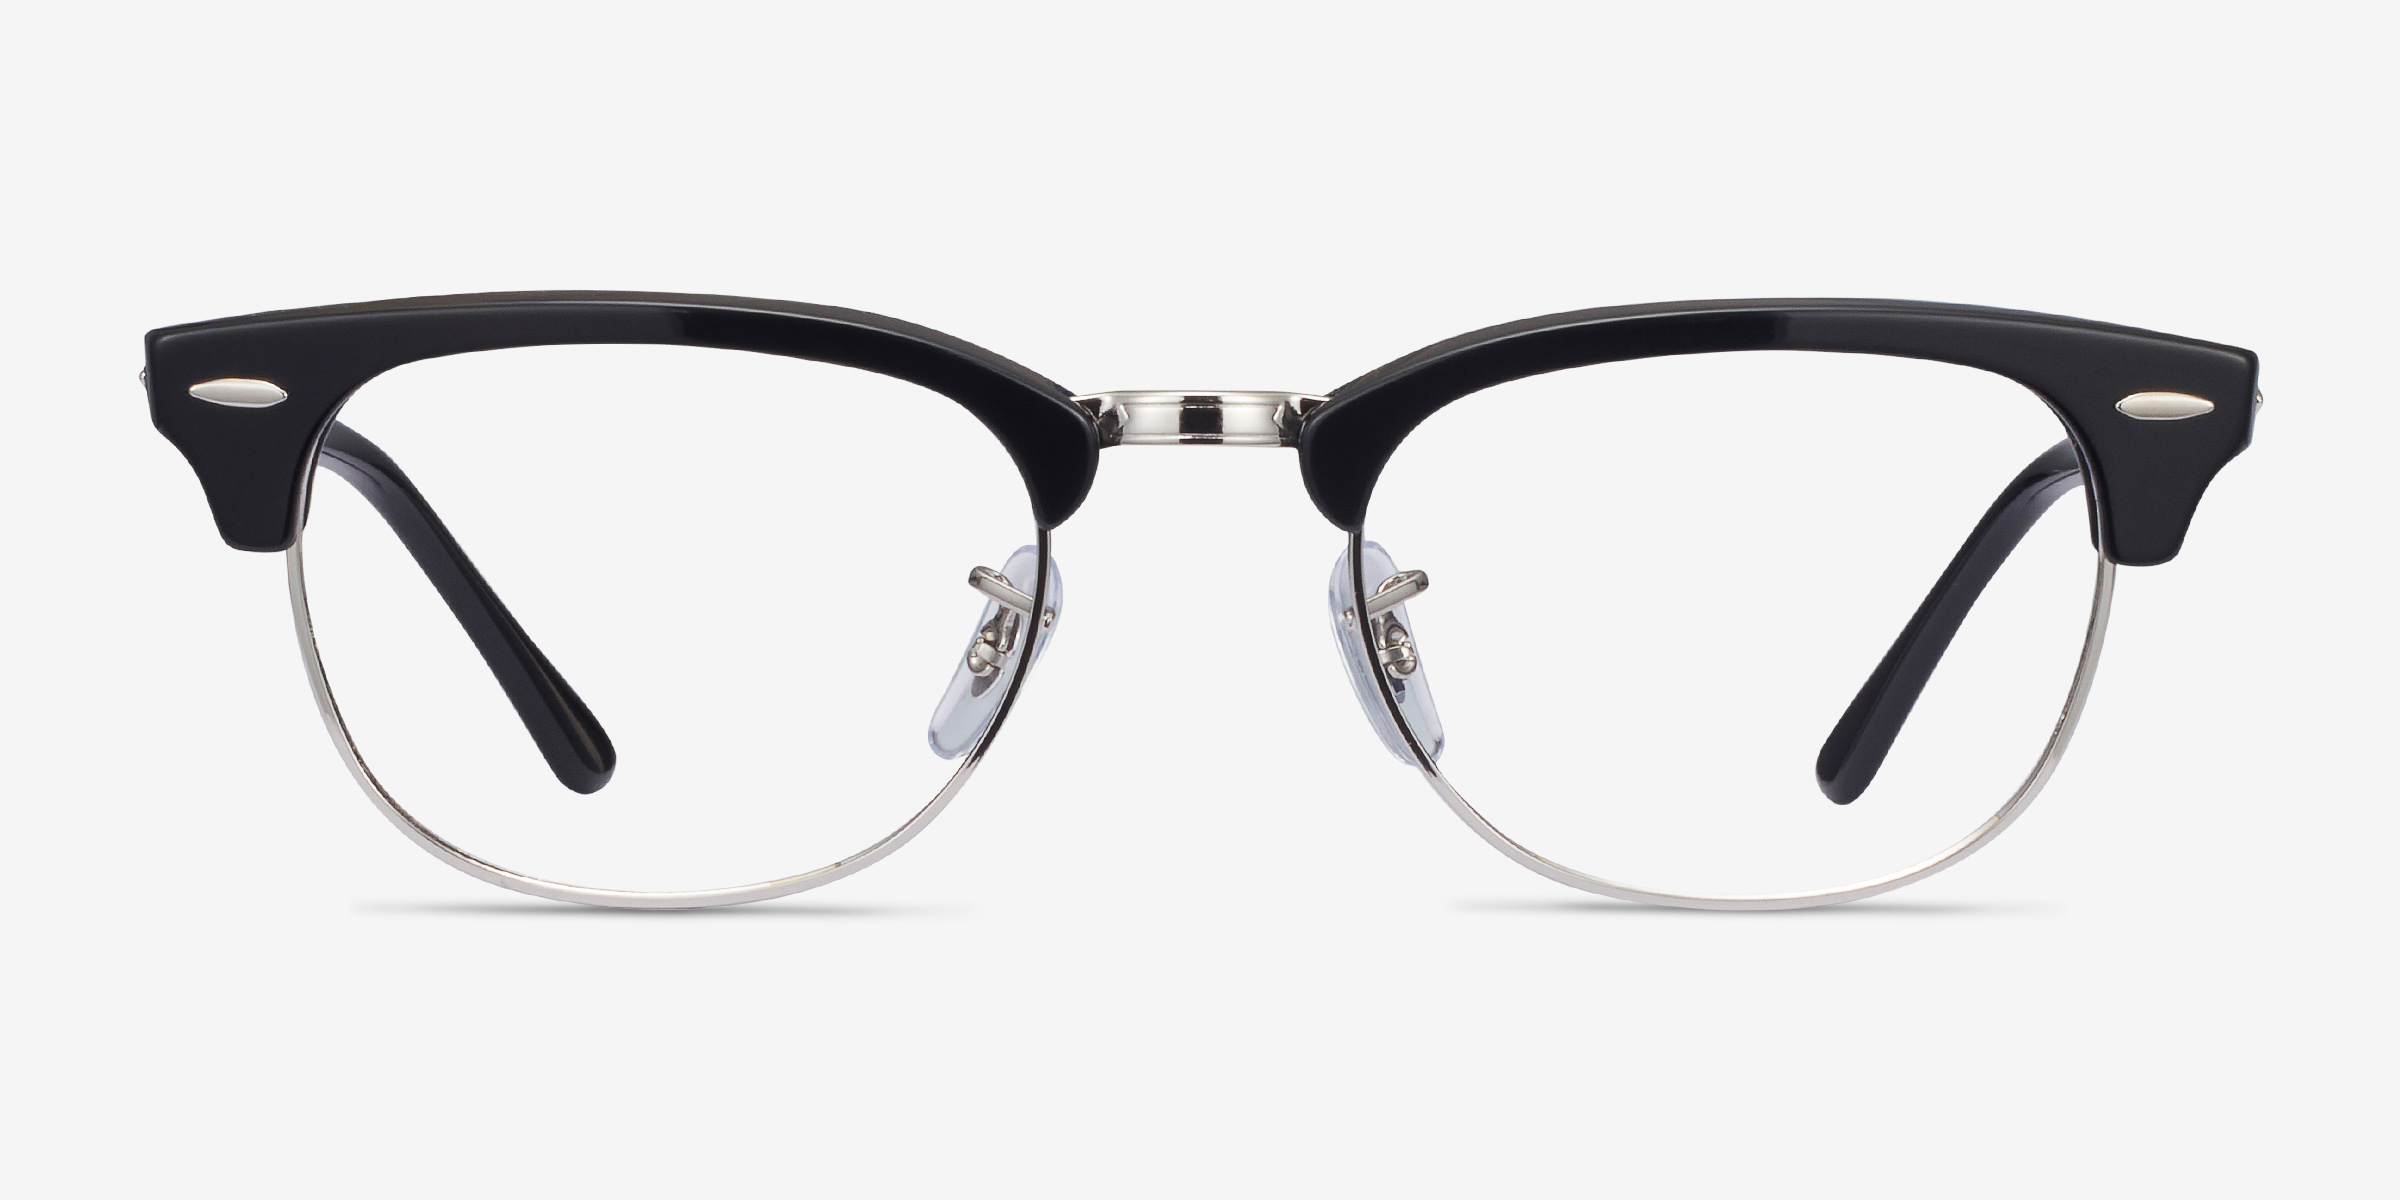 Ray Ban Rb5154 Browline Black Frame Eyeglasses Eyebuydirect